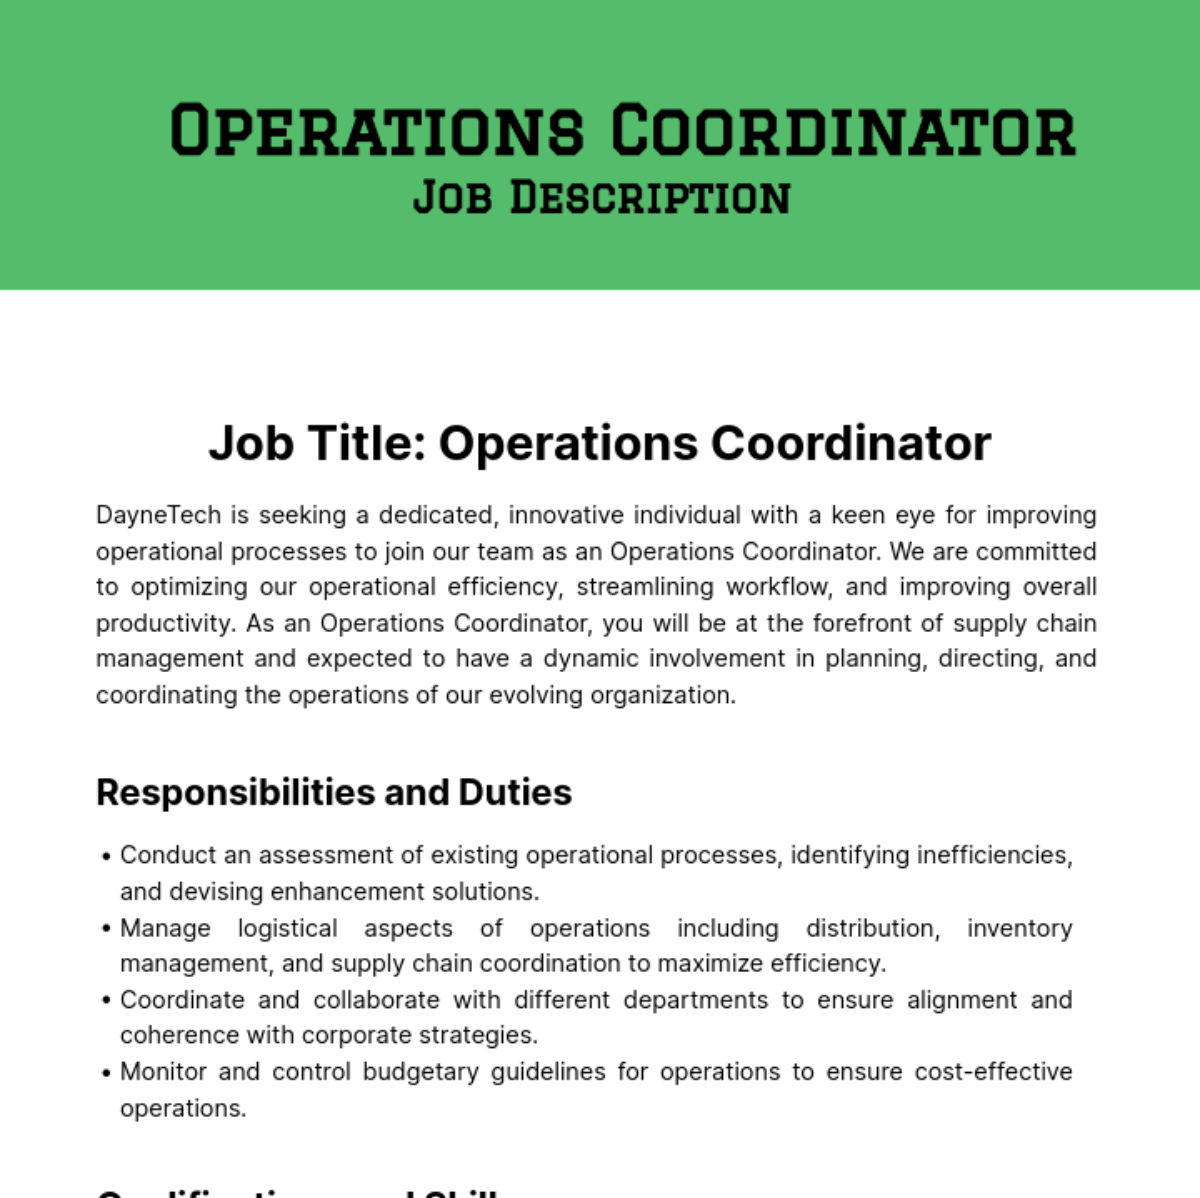 Operations Coordinator Job Description Template